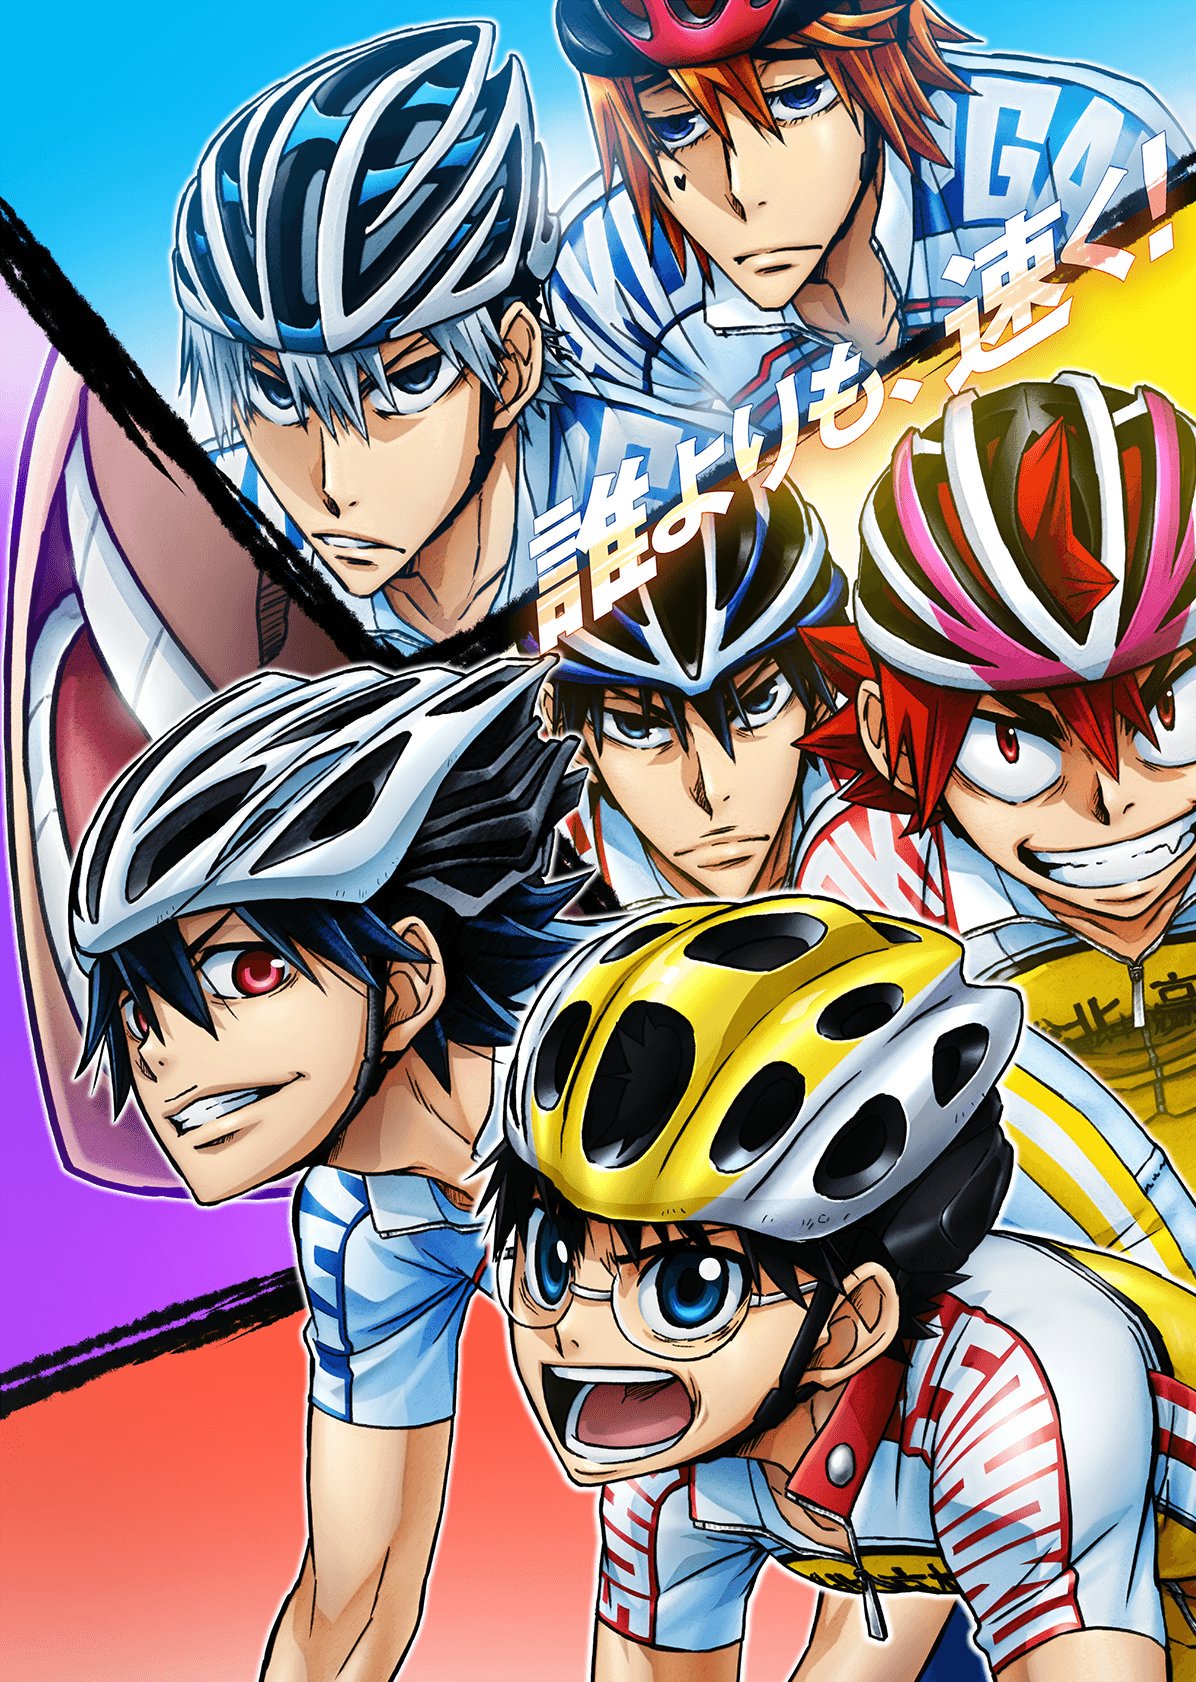 Yowamushi Pedal Glory Line الحلقة 17 مترجمة الموسم الرابع اون لاين Shahiid Anime